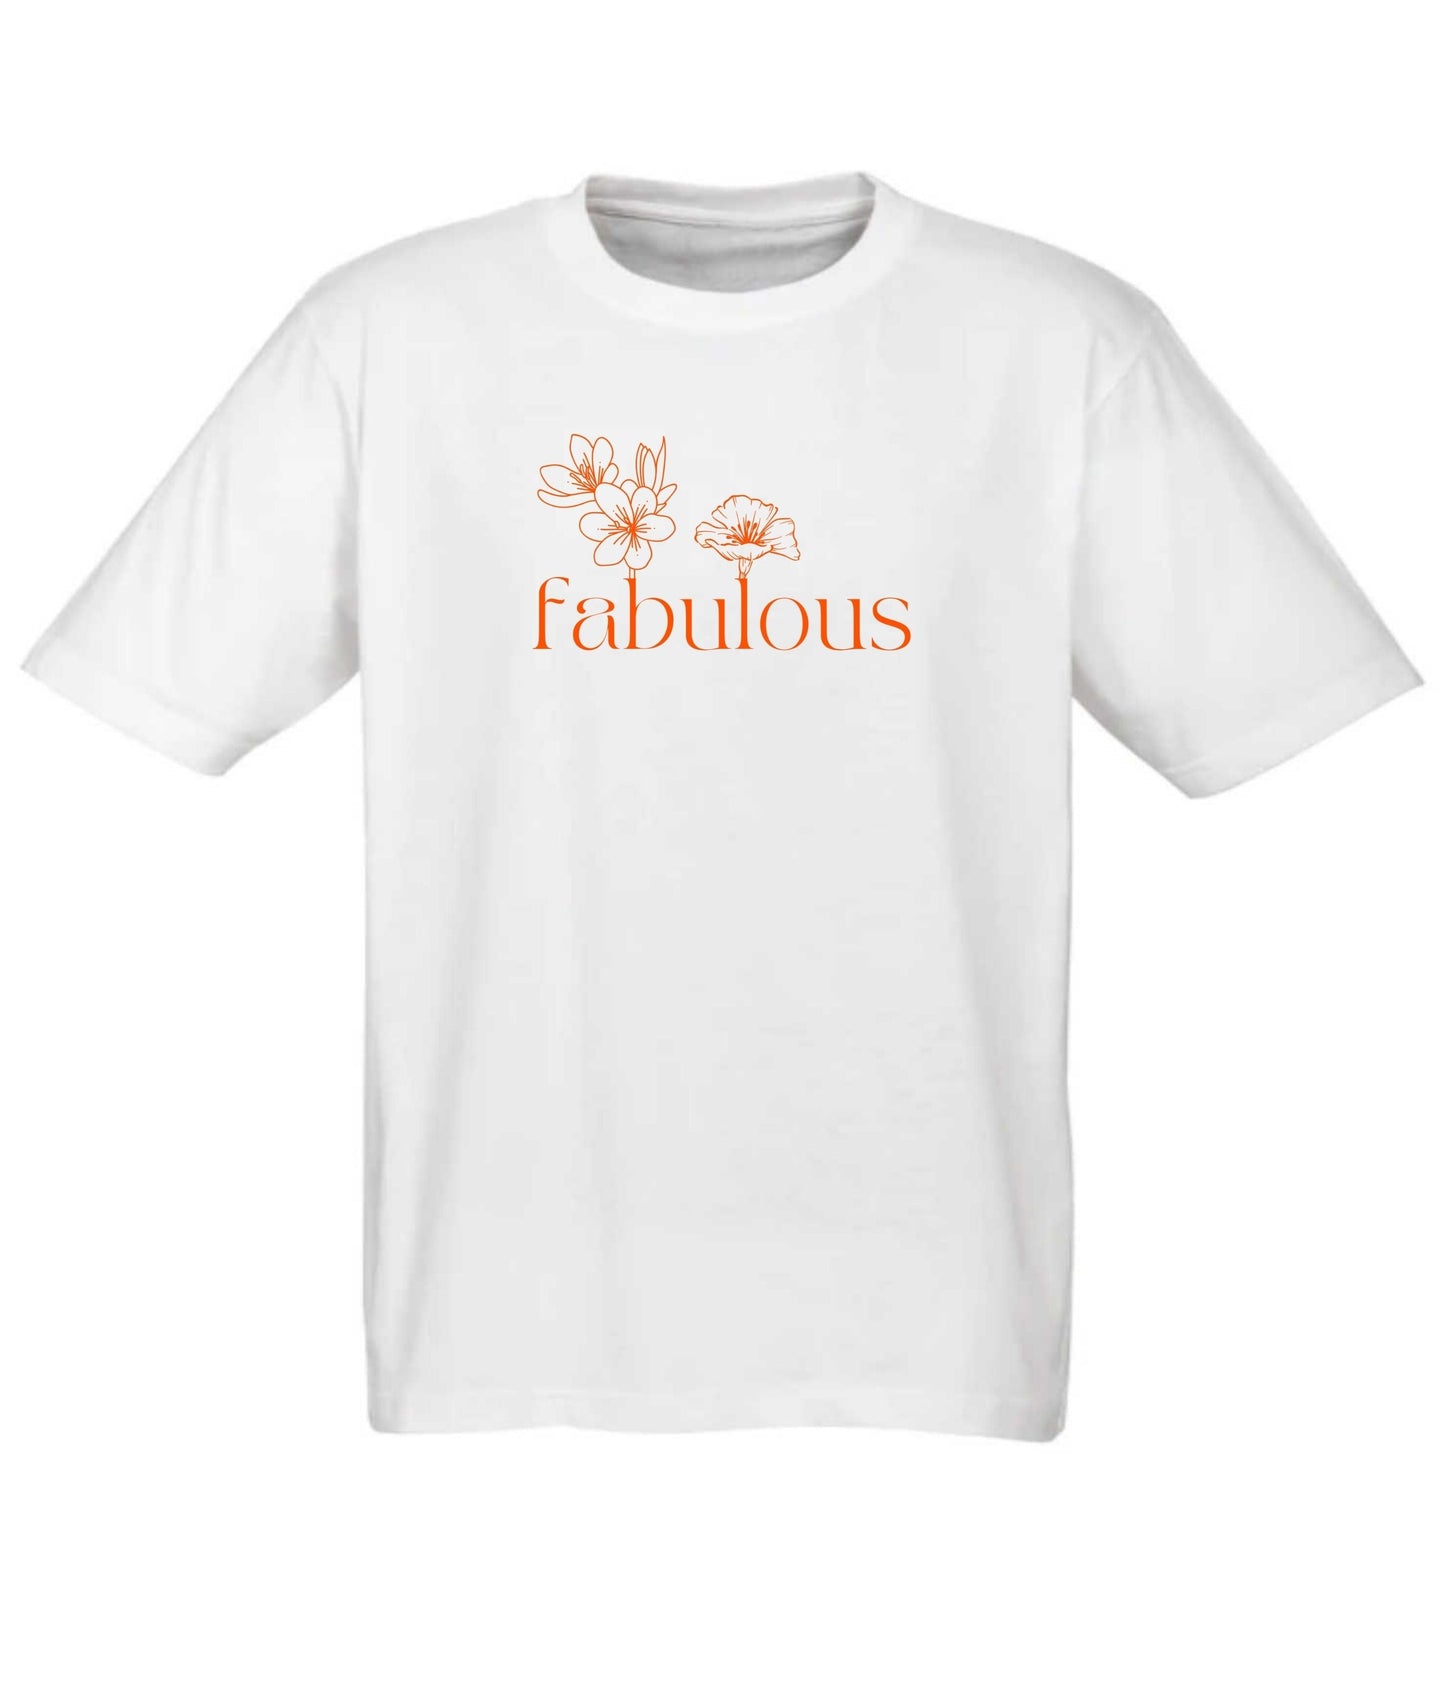 Tee - Fabulous (White) - Frame 'n' Copy